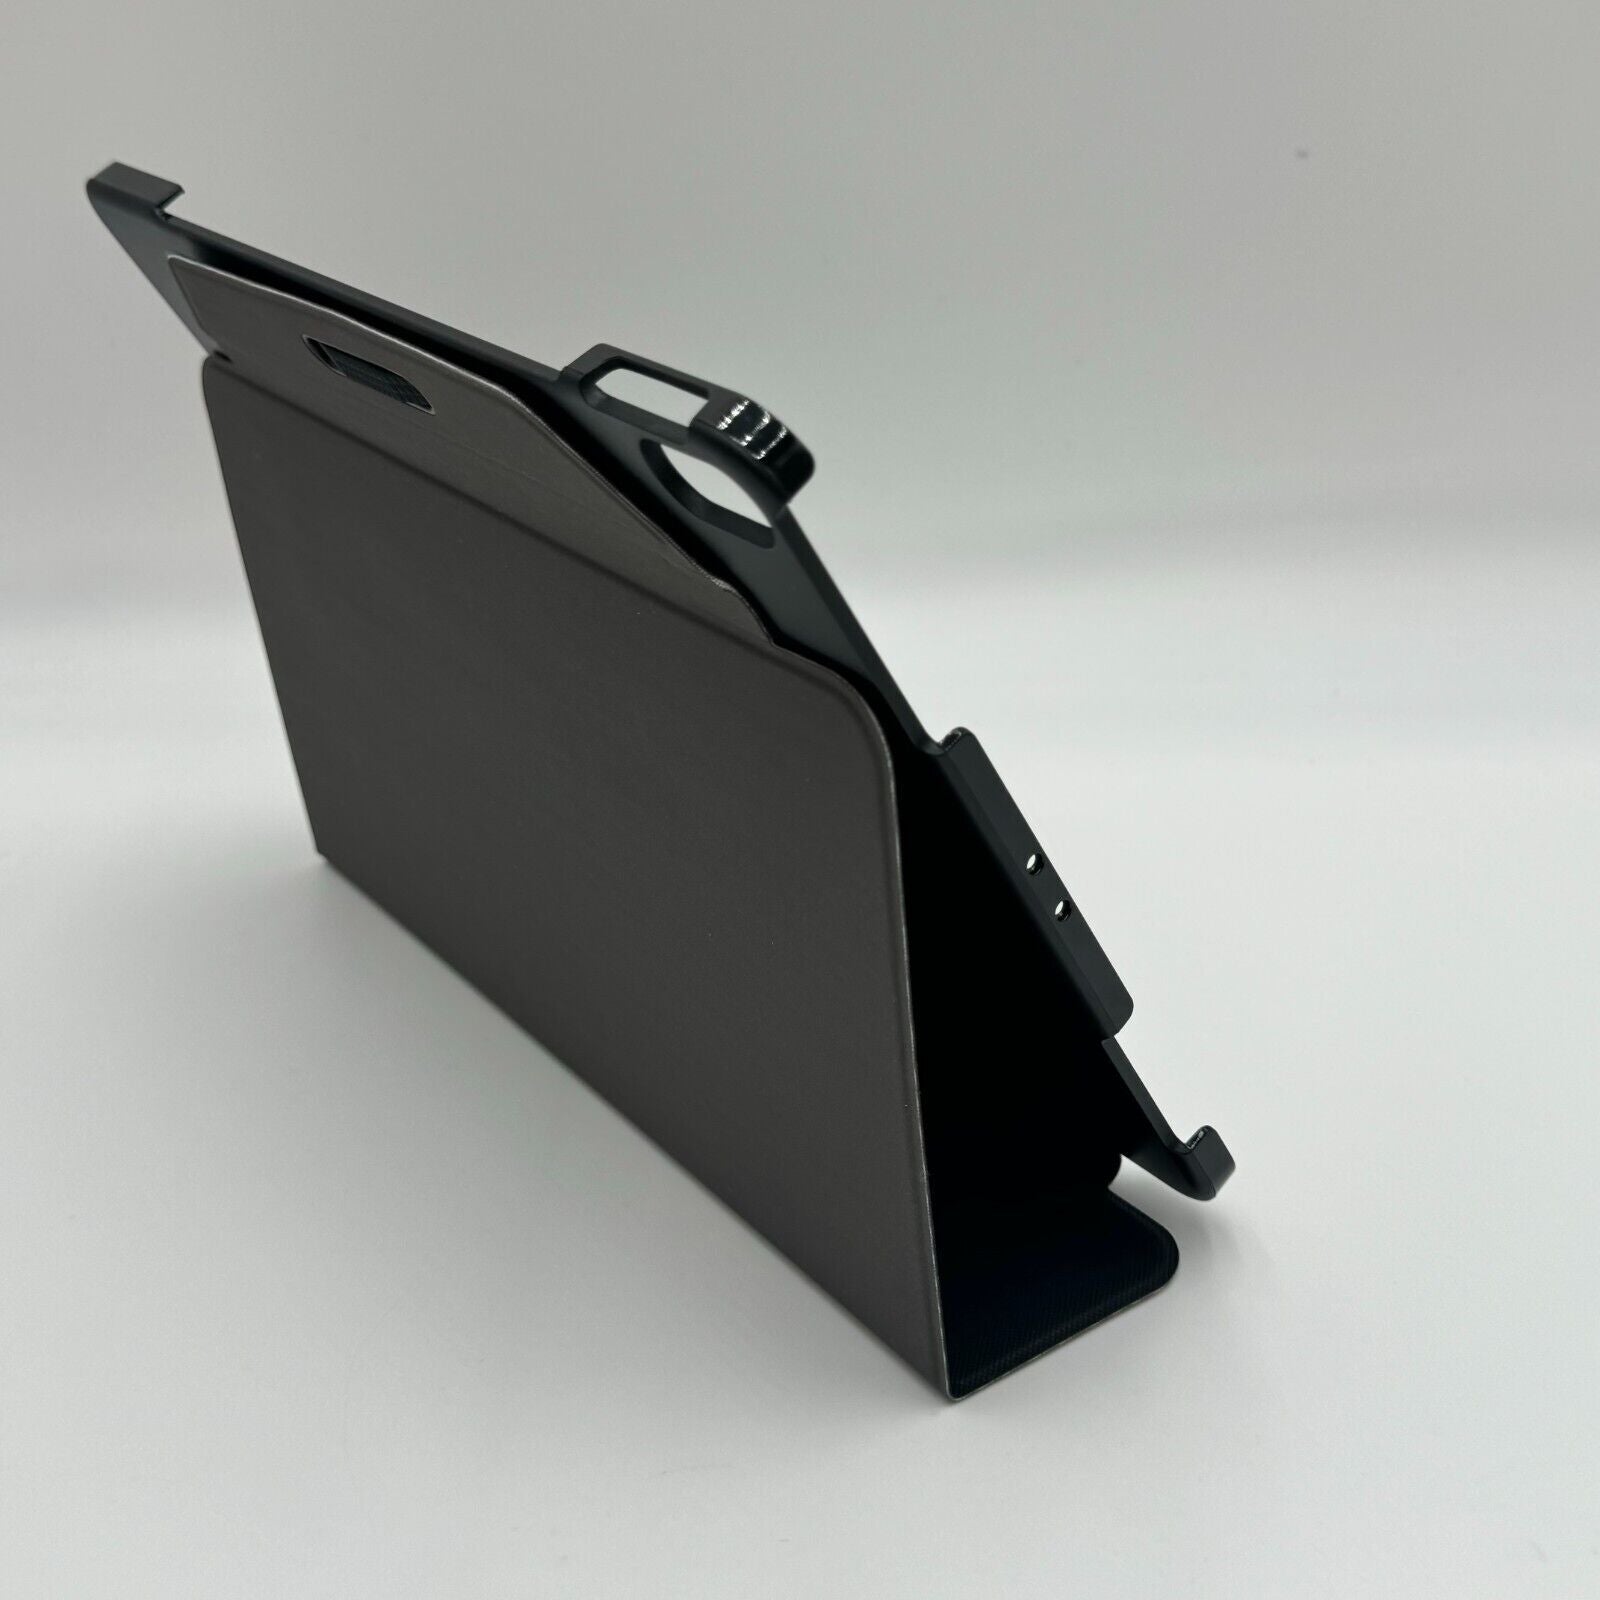 Case Logic iPad Pro 12.9” Snapview Case Generation 1 & 2 - New In Box